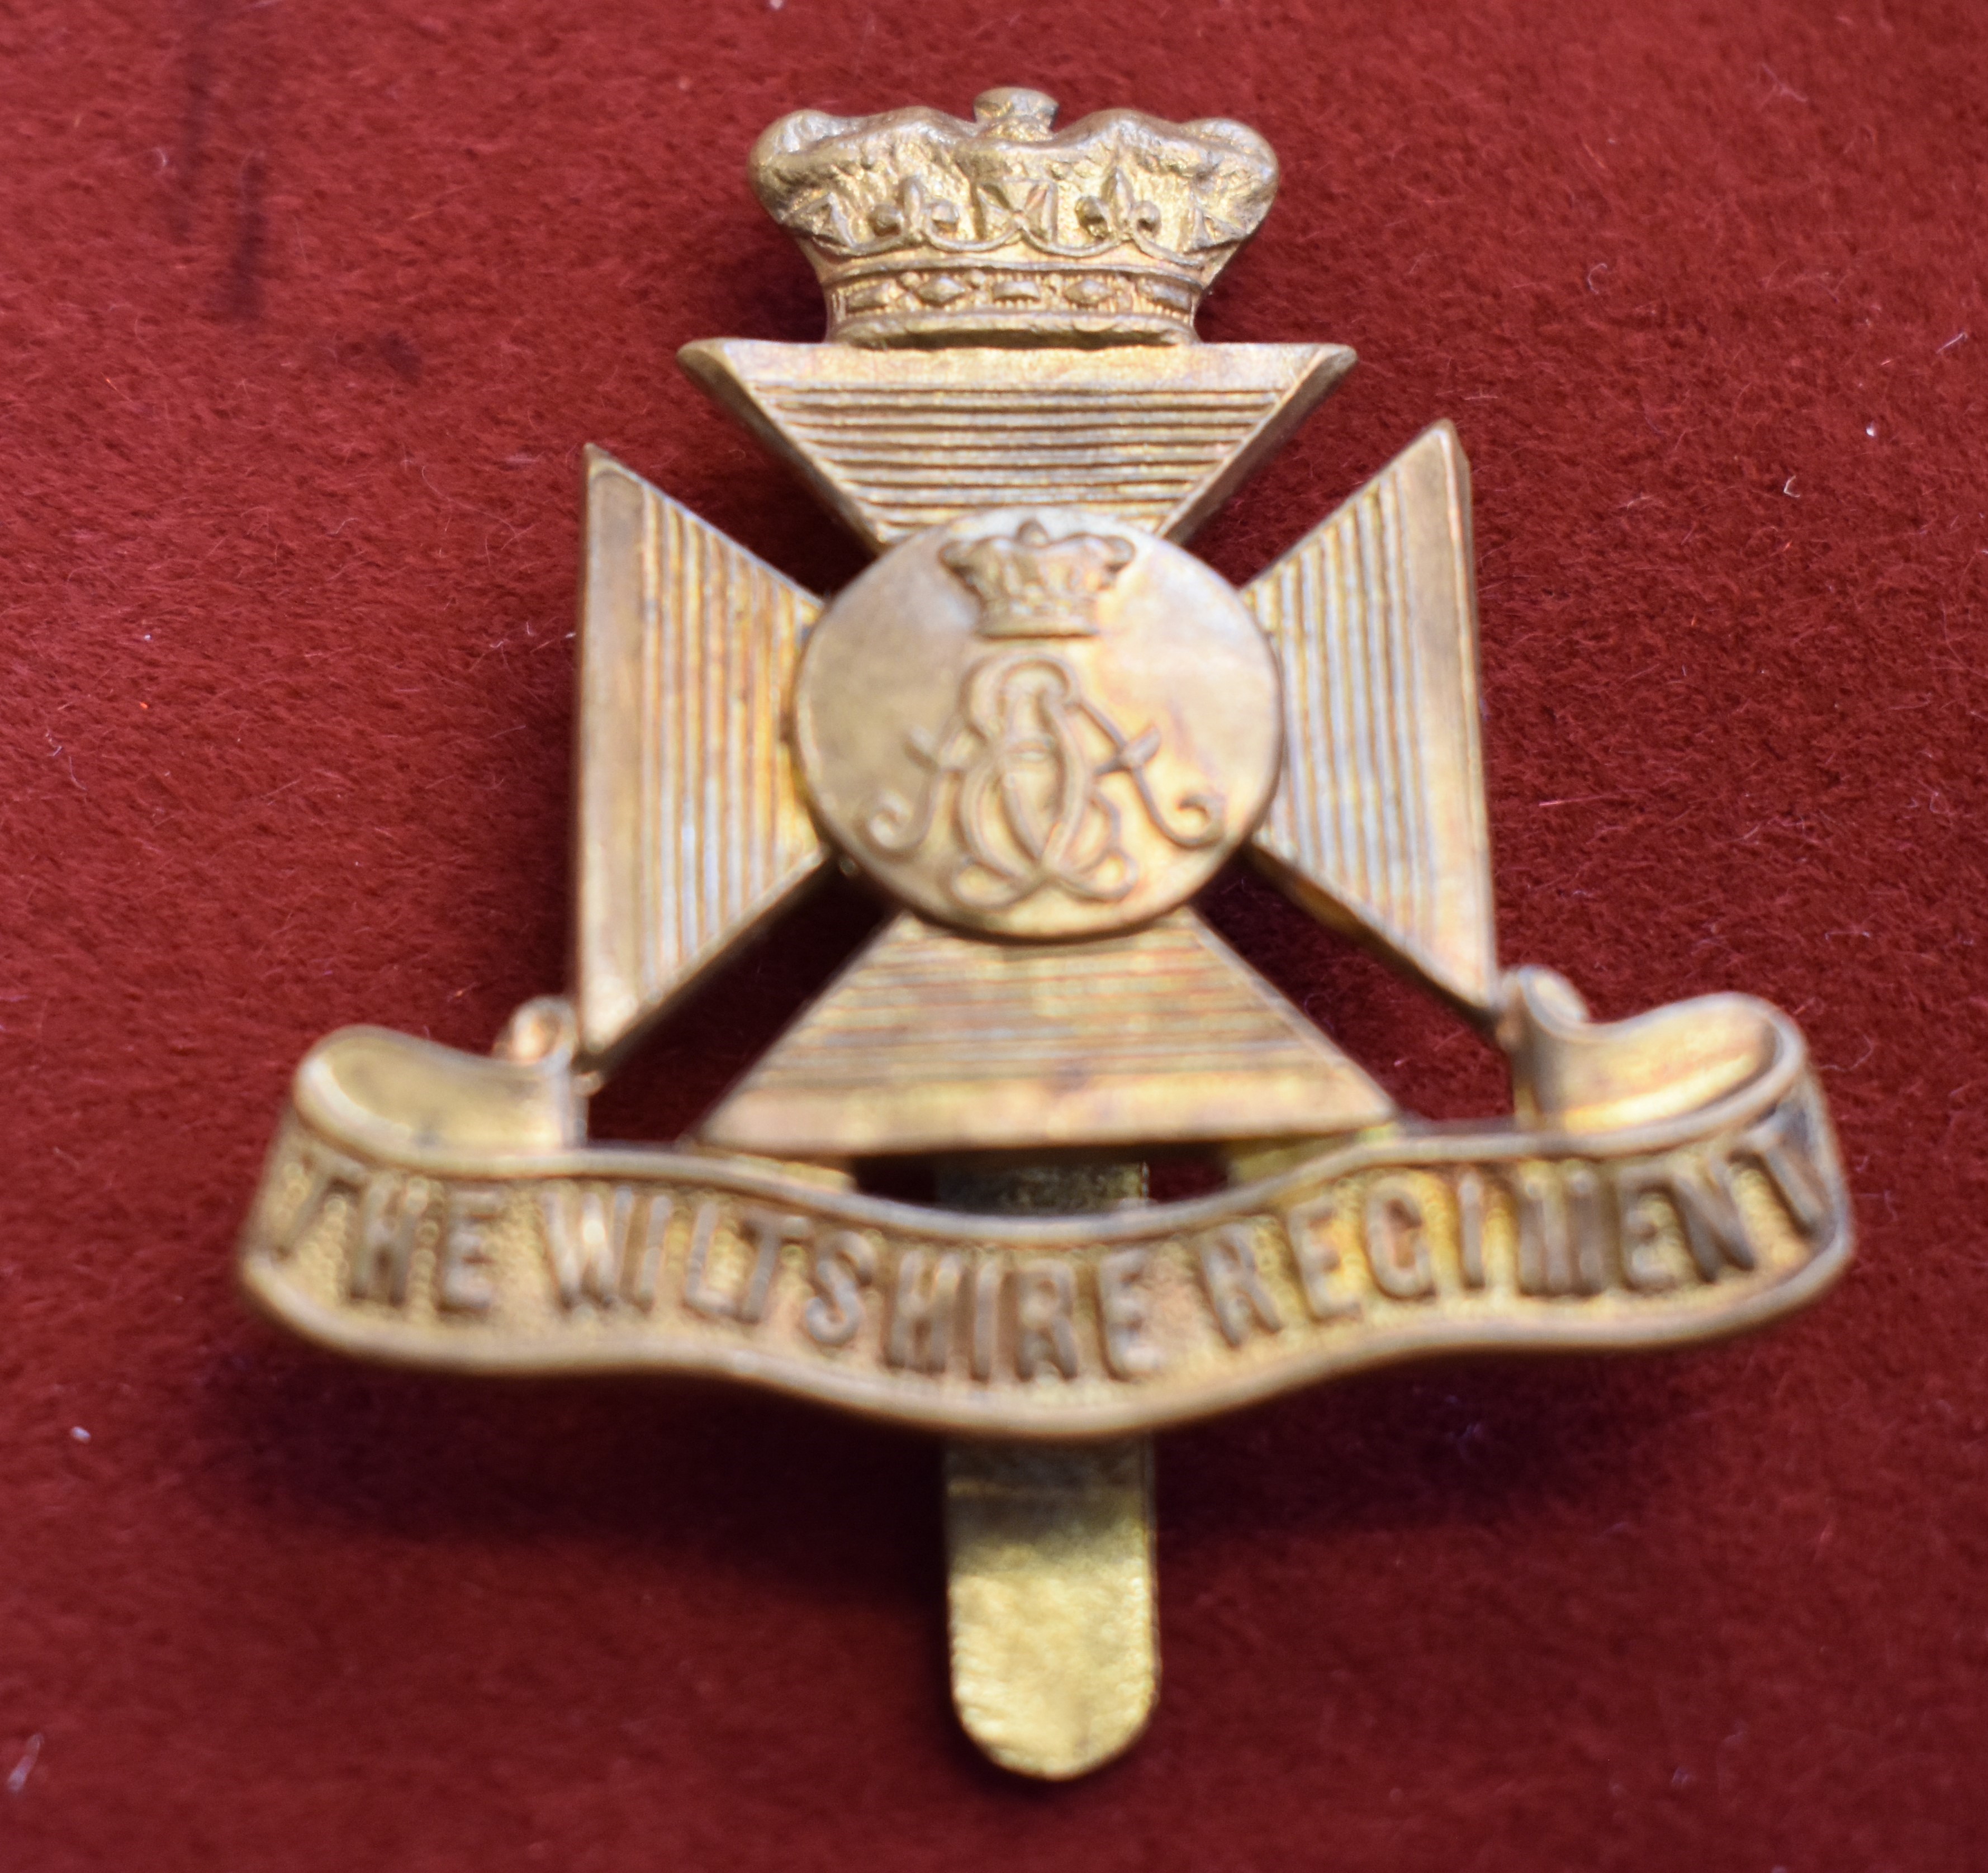 The Wiltshire Regiment WWI Cap Badge (Gilding-metal), slider